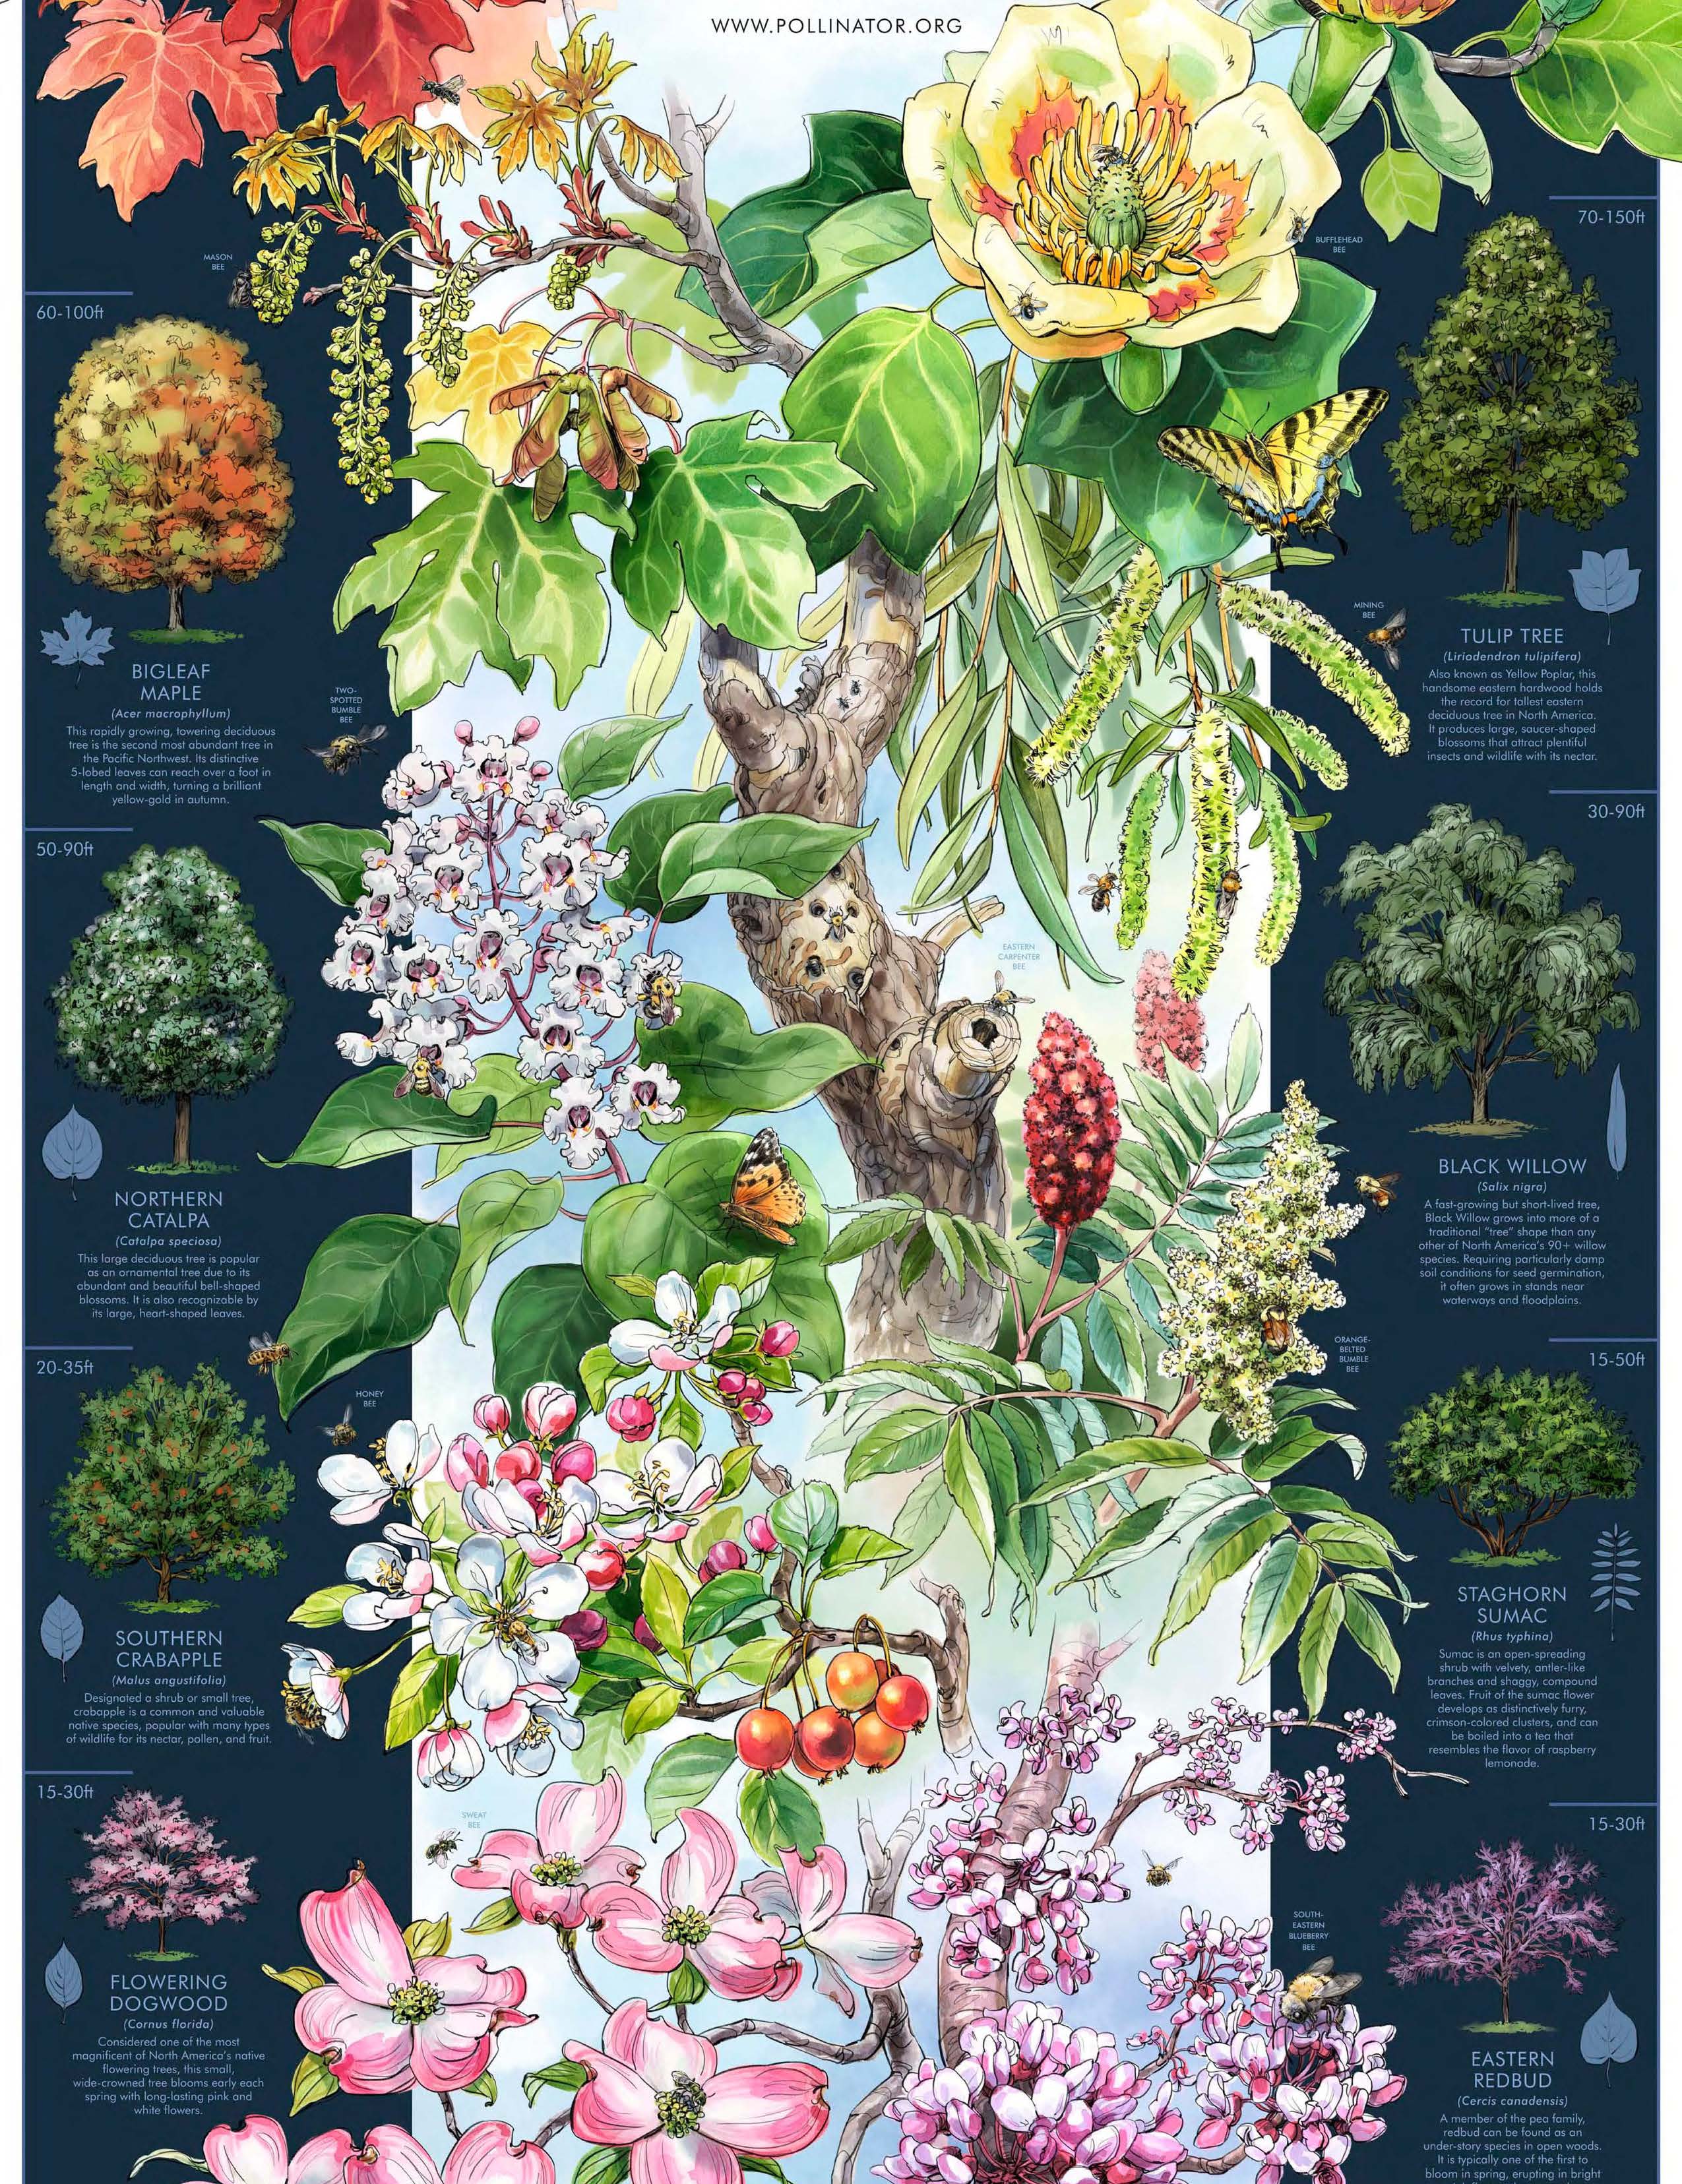 2016 Pollinator poster